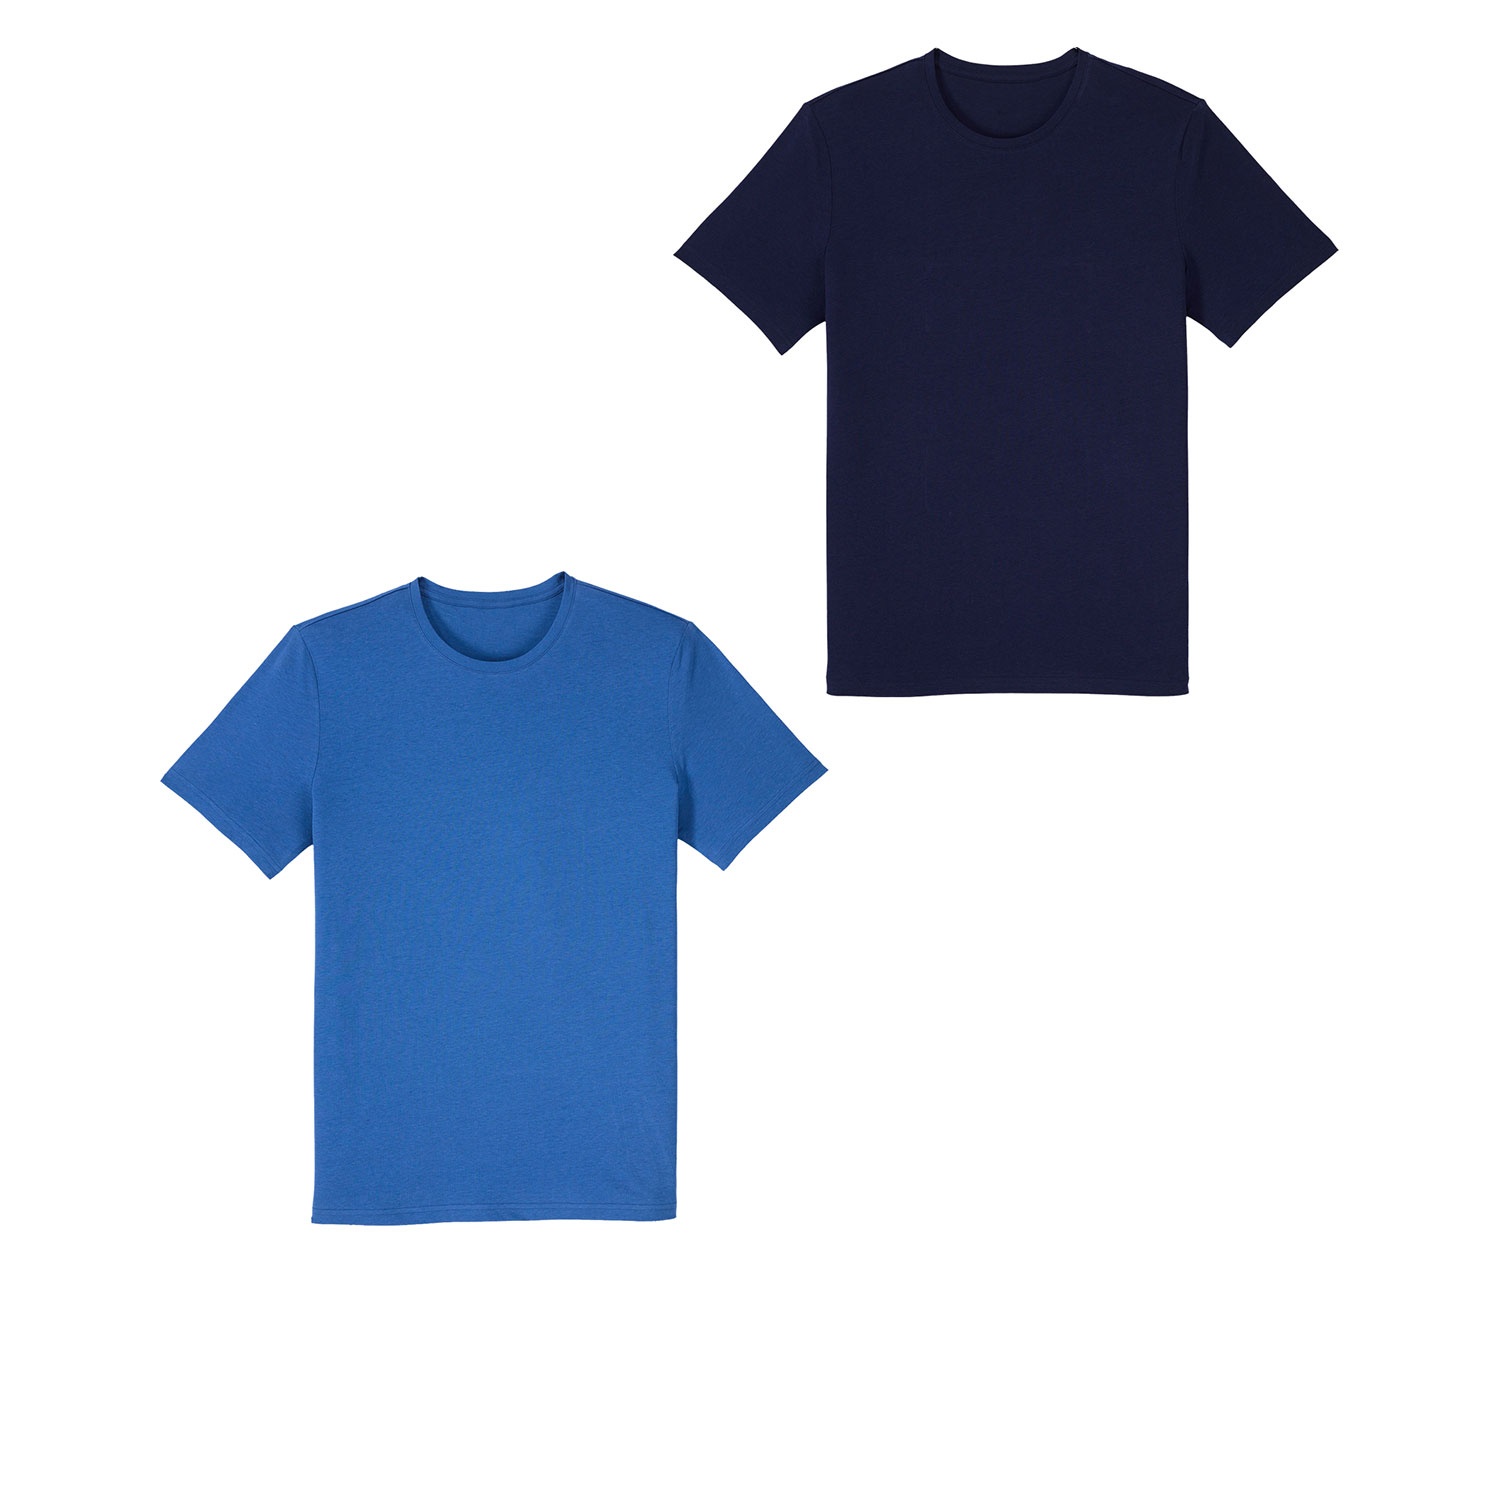 WATSON'S Herren T-Shirts, 2er-Set